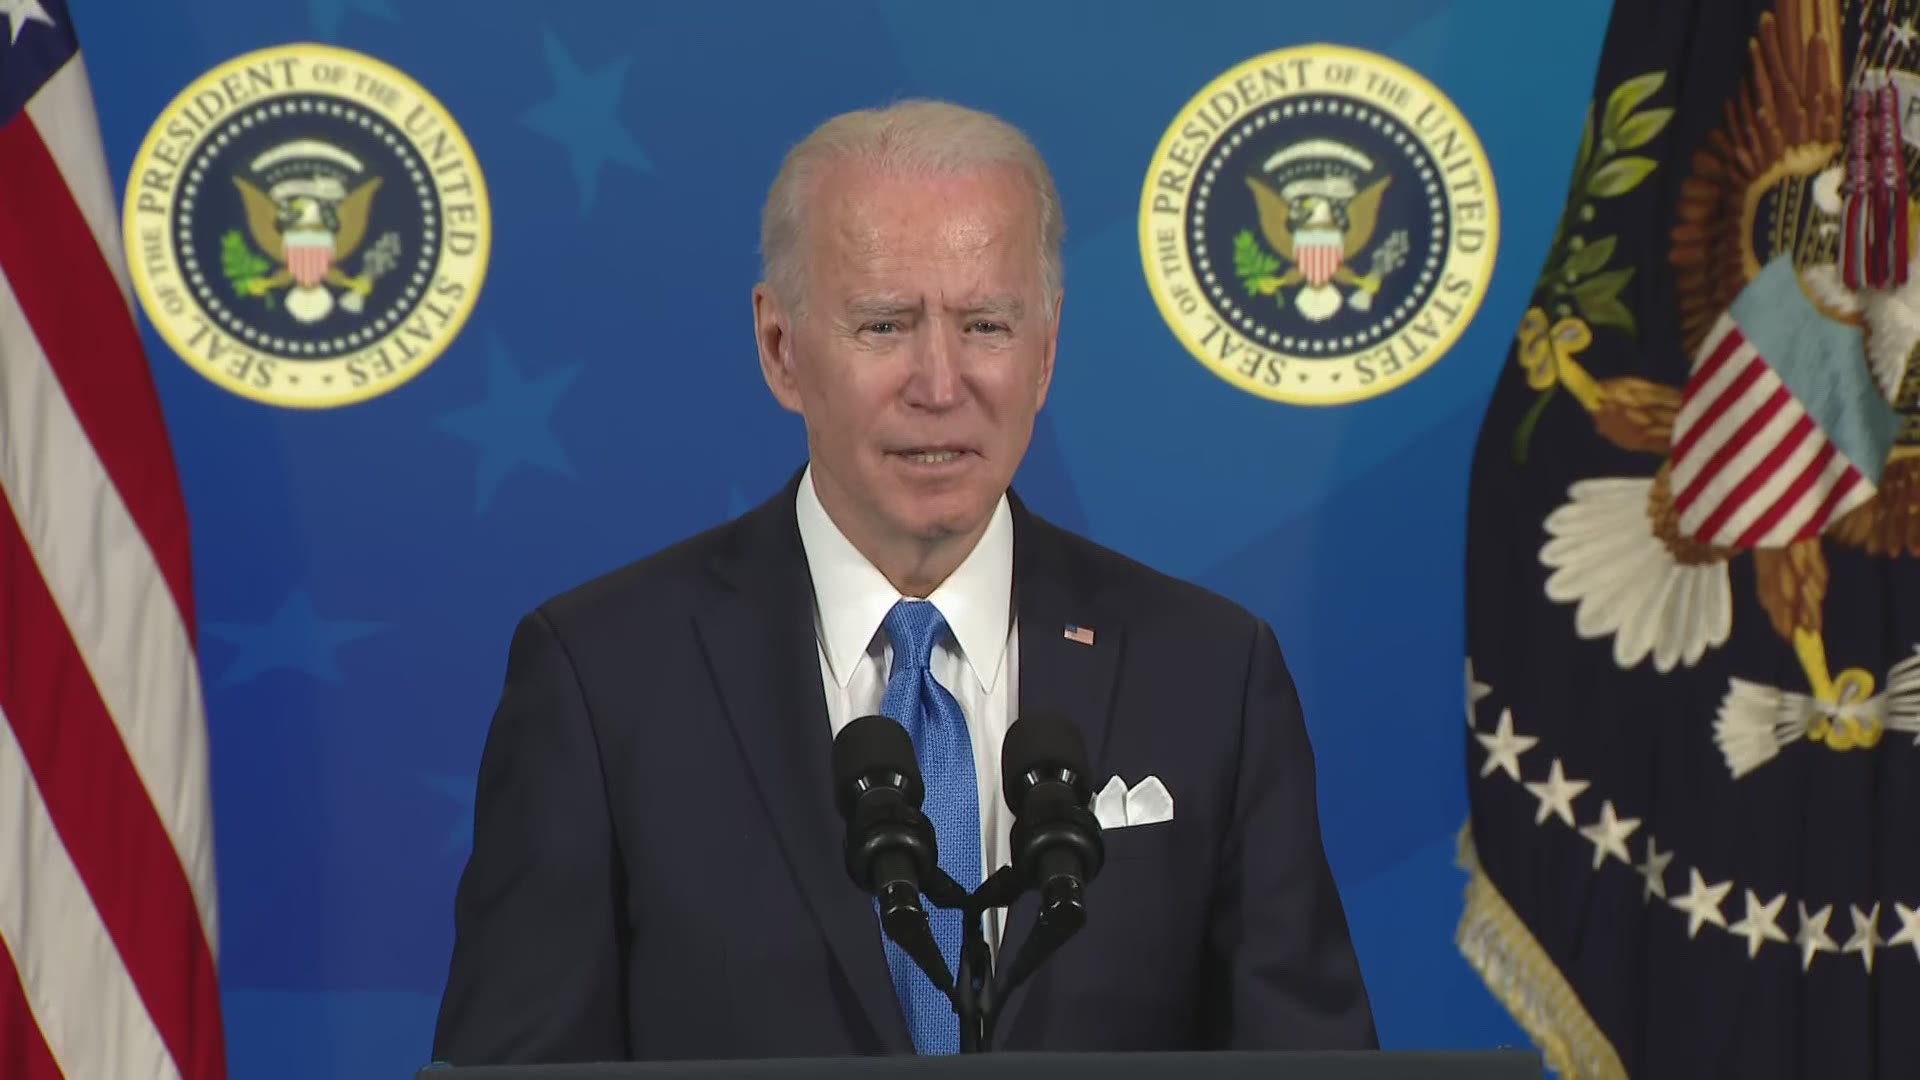 President Biden said he'll outline 'the next phase of COVID response' during his Thursday primetime address.